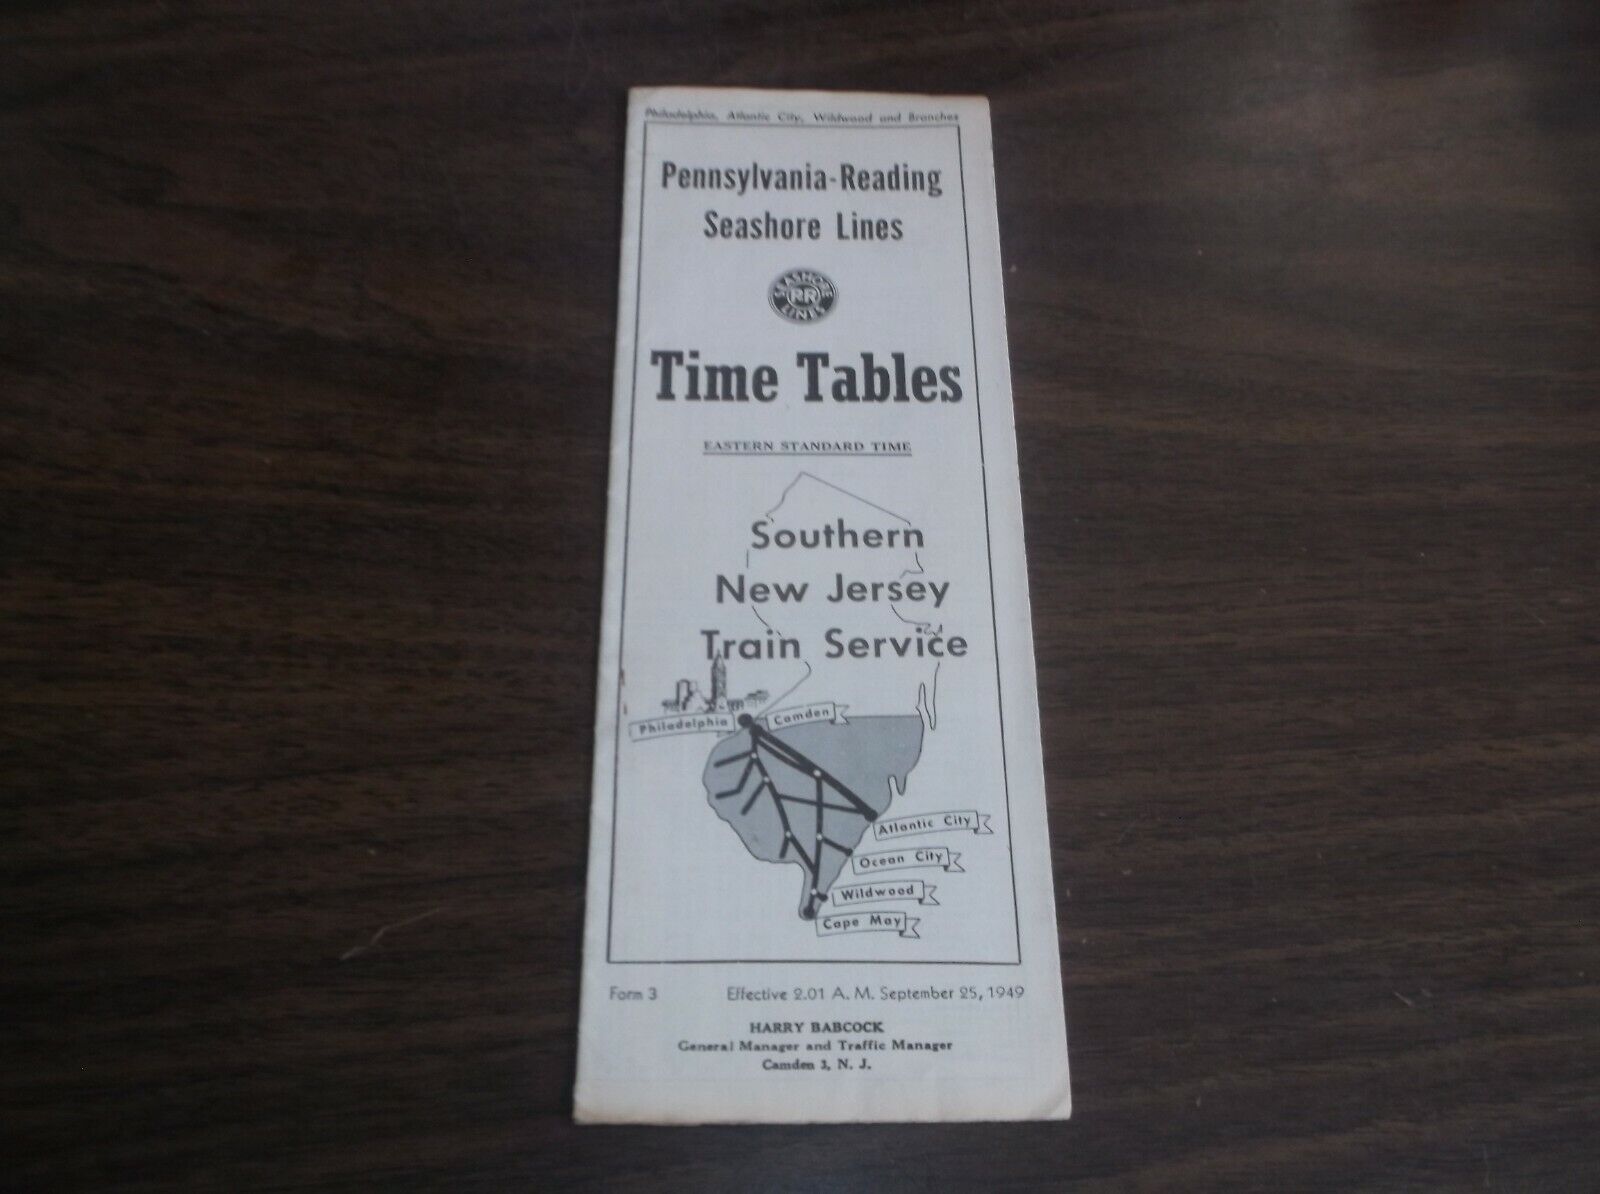 SEPTEMBER 1949 PRSL PENNSYLVANIA READING SEASHORE LINES FORM 3 PUBLIC TIMETABLE